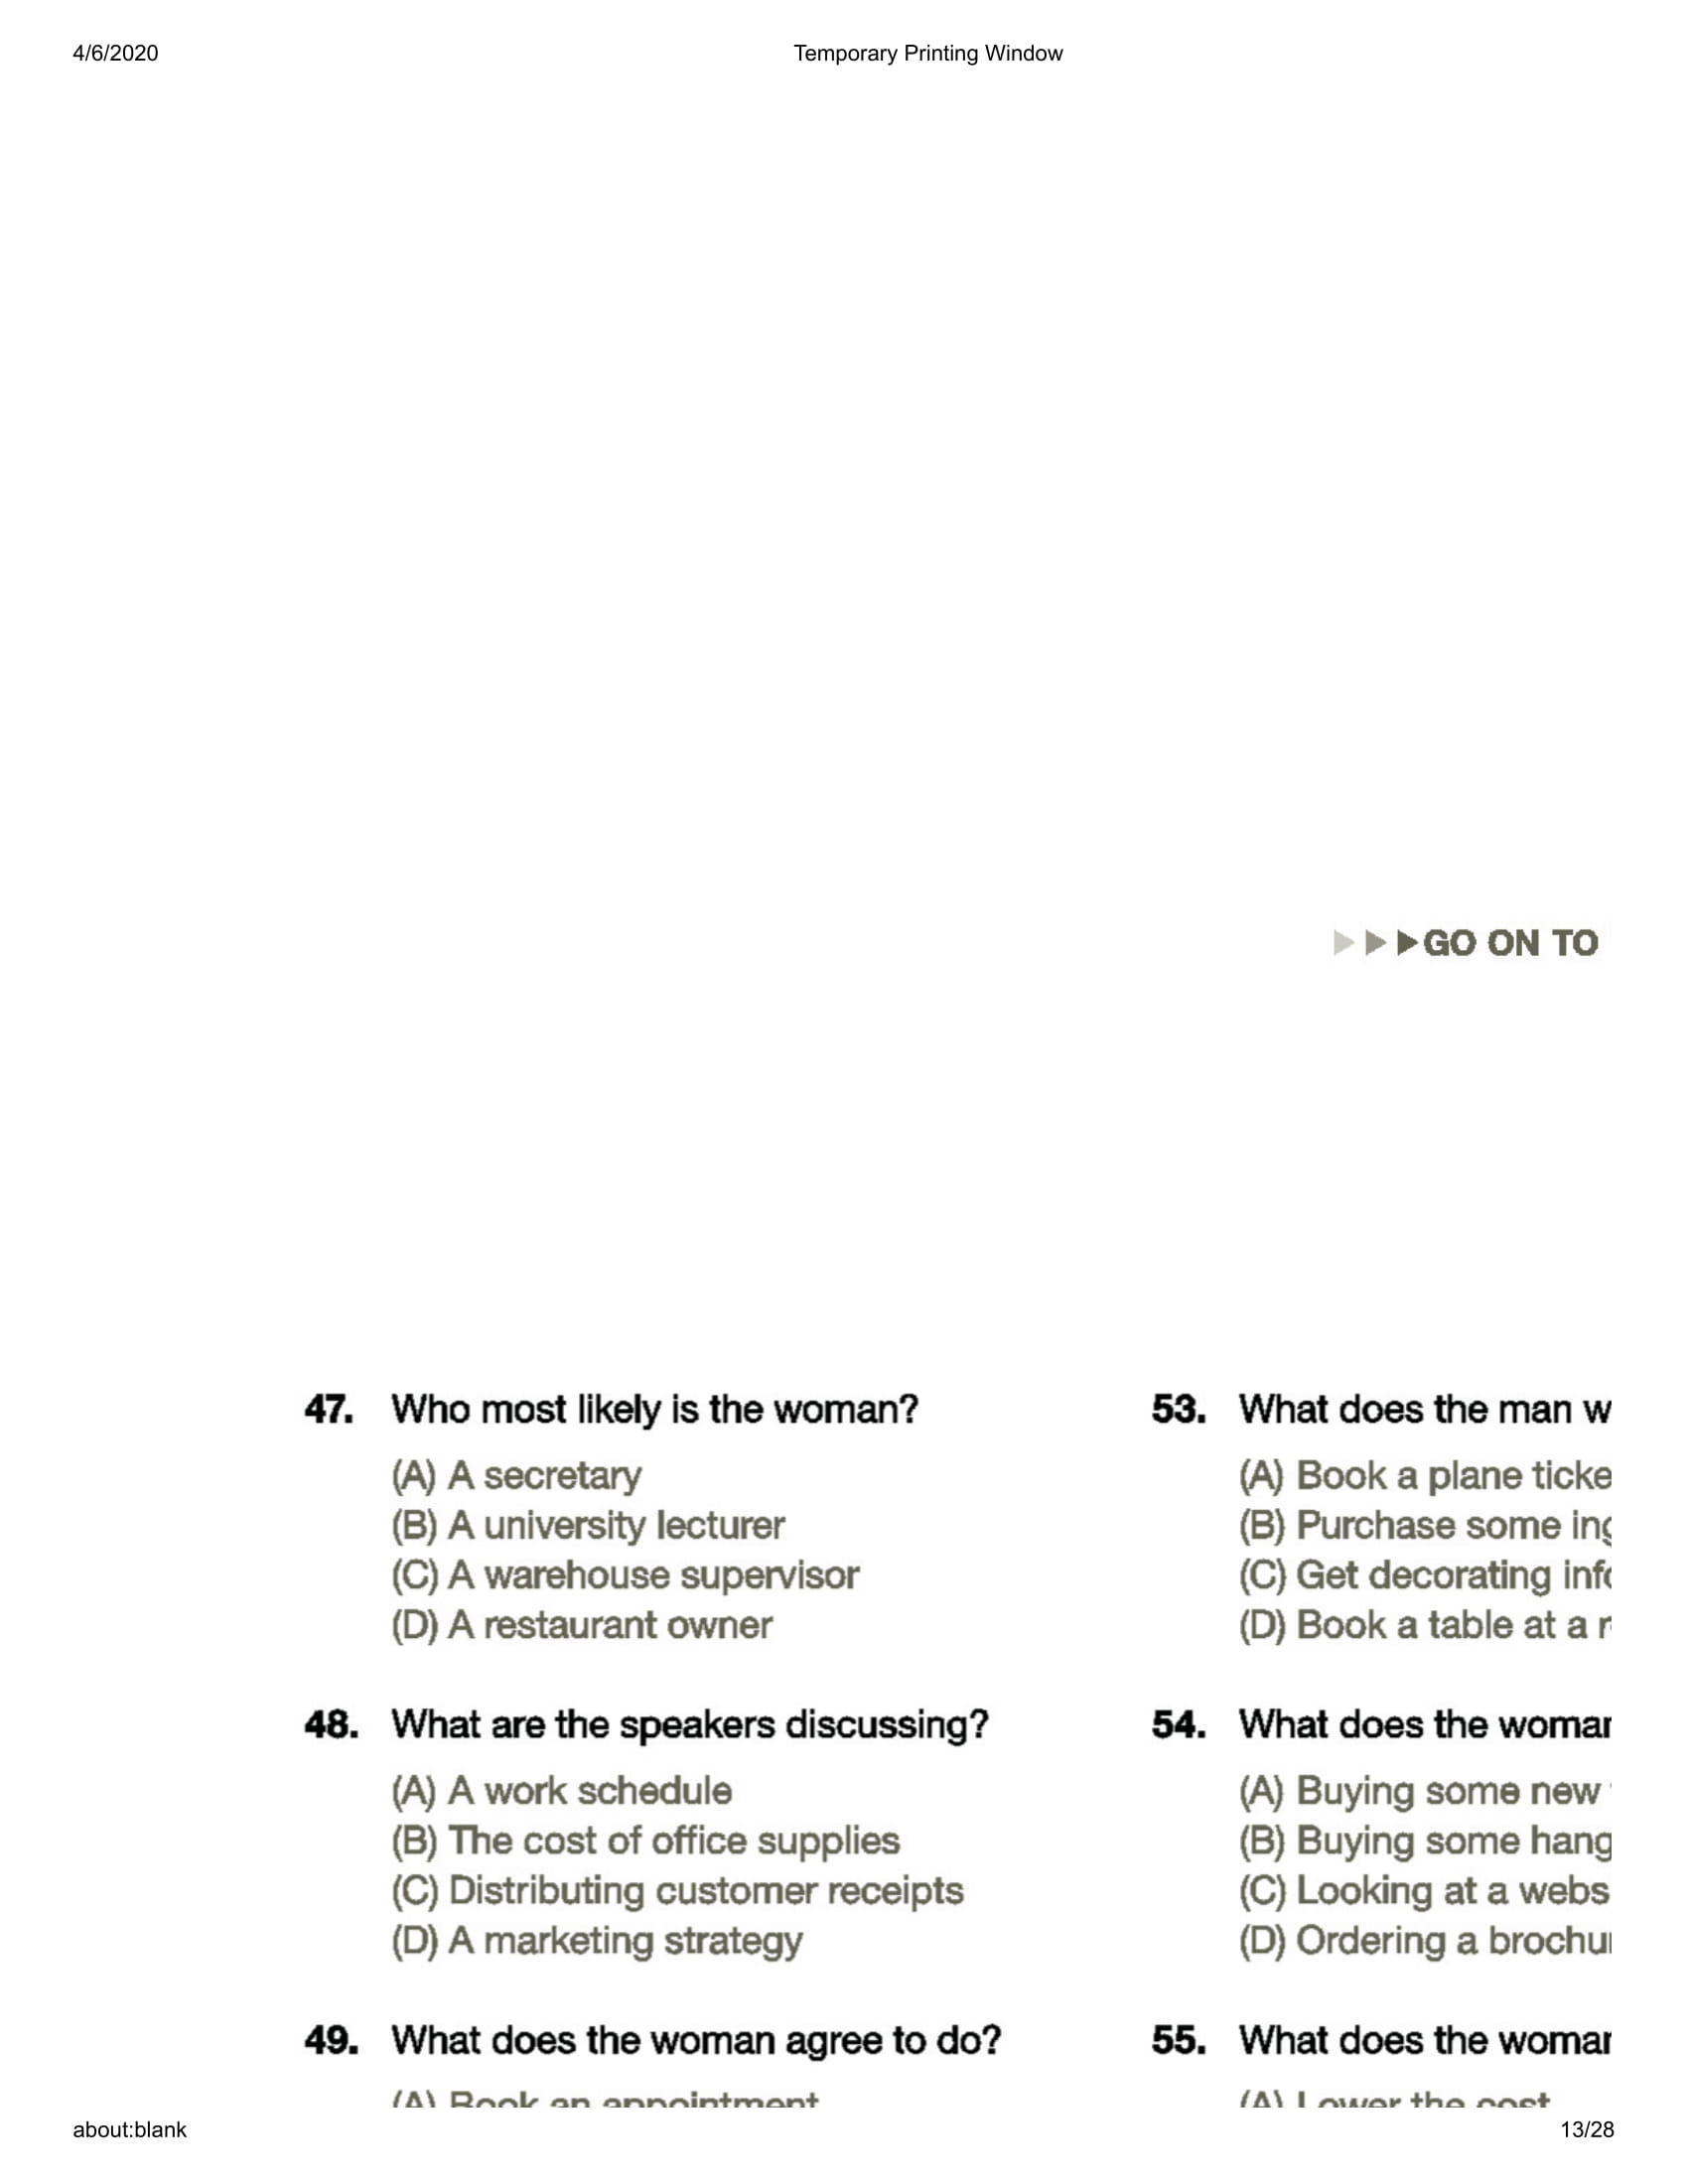 Comprehensive Toeic Training 1000 Practice Test Items Vol 2 - Kèm CD PDF